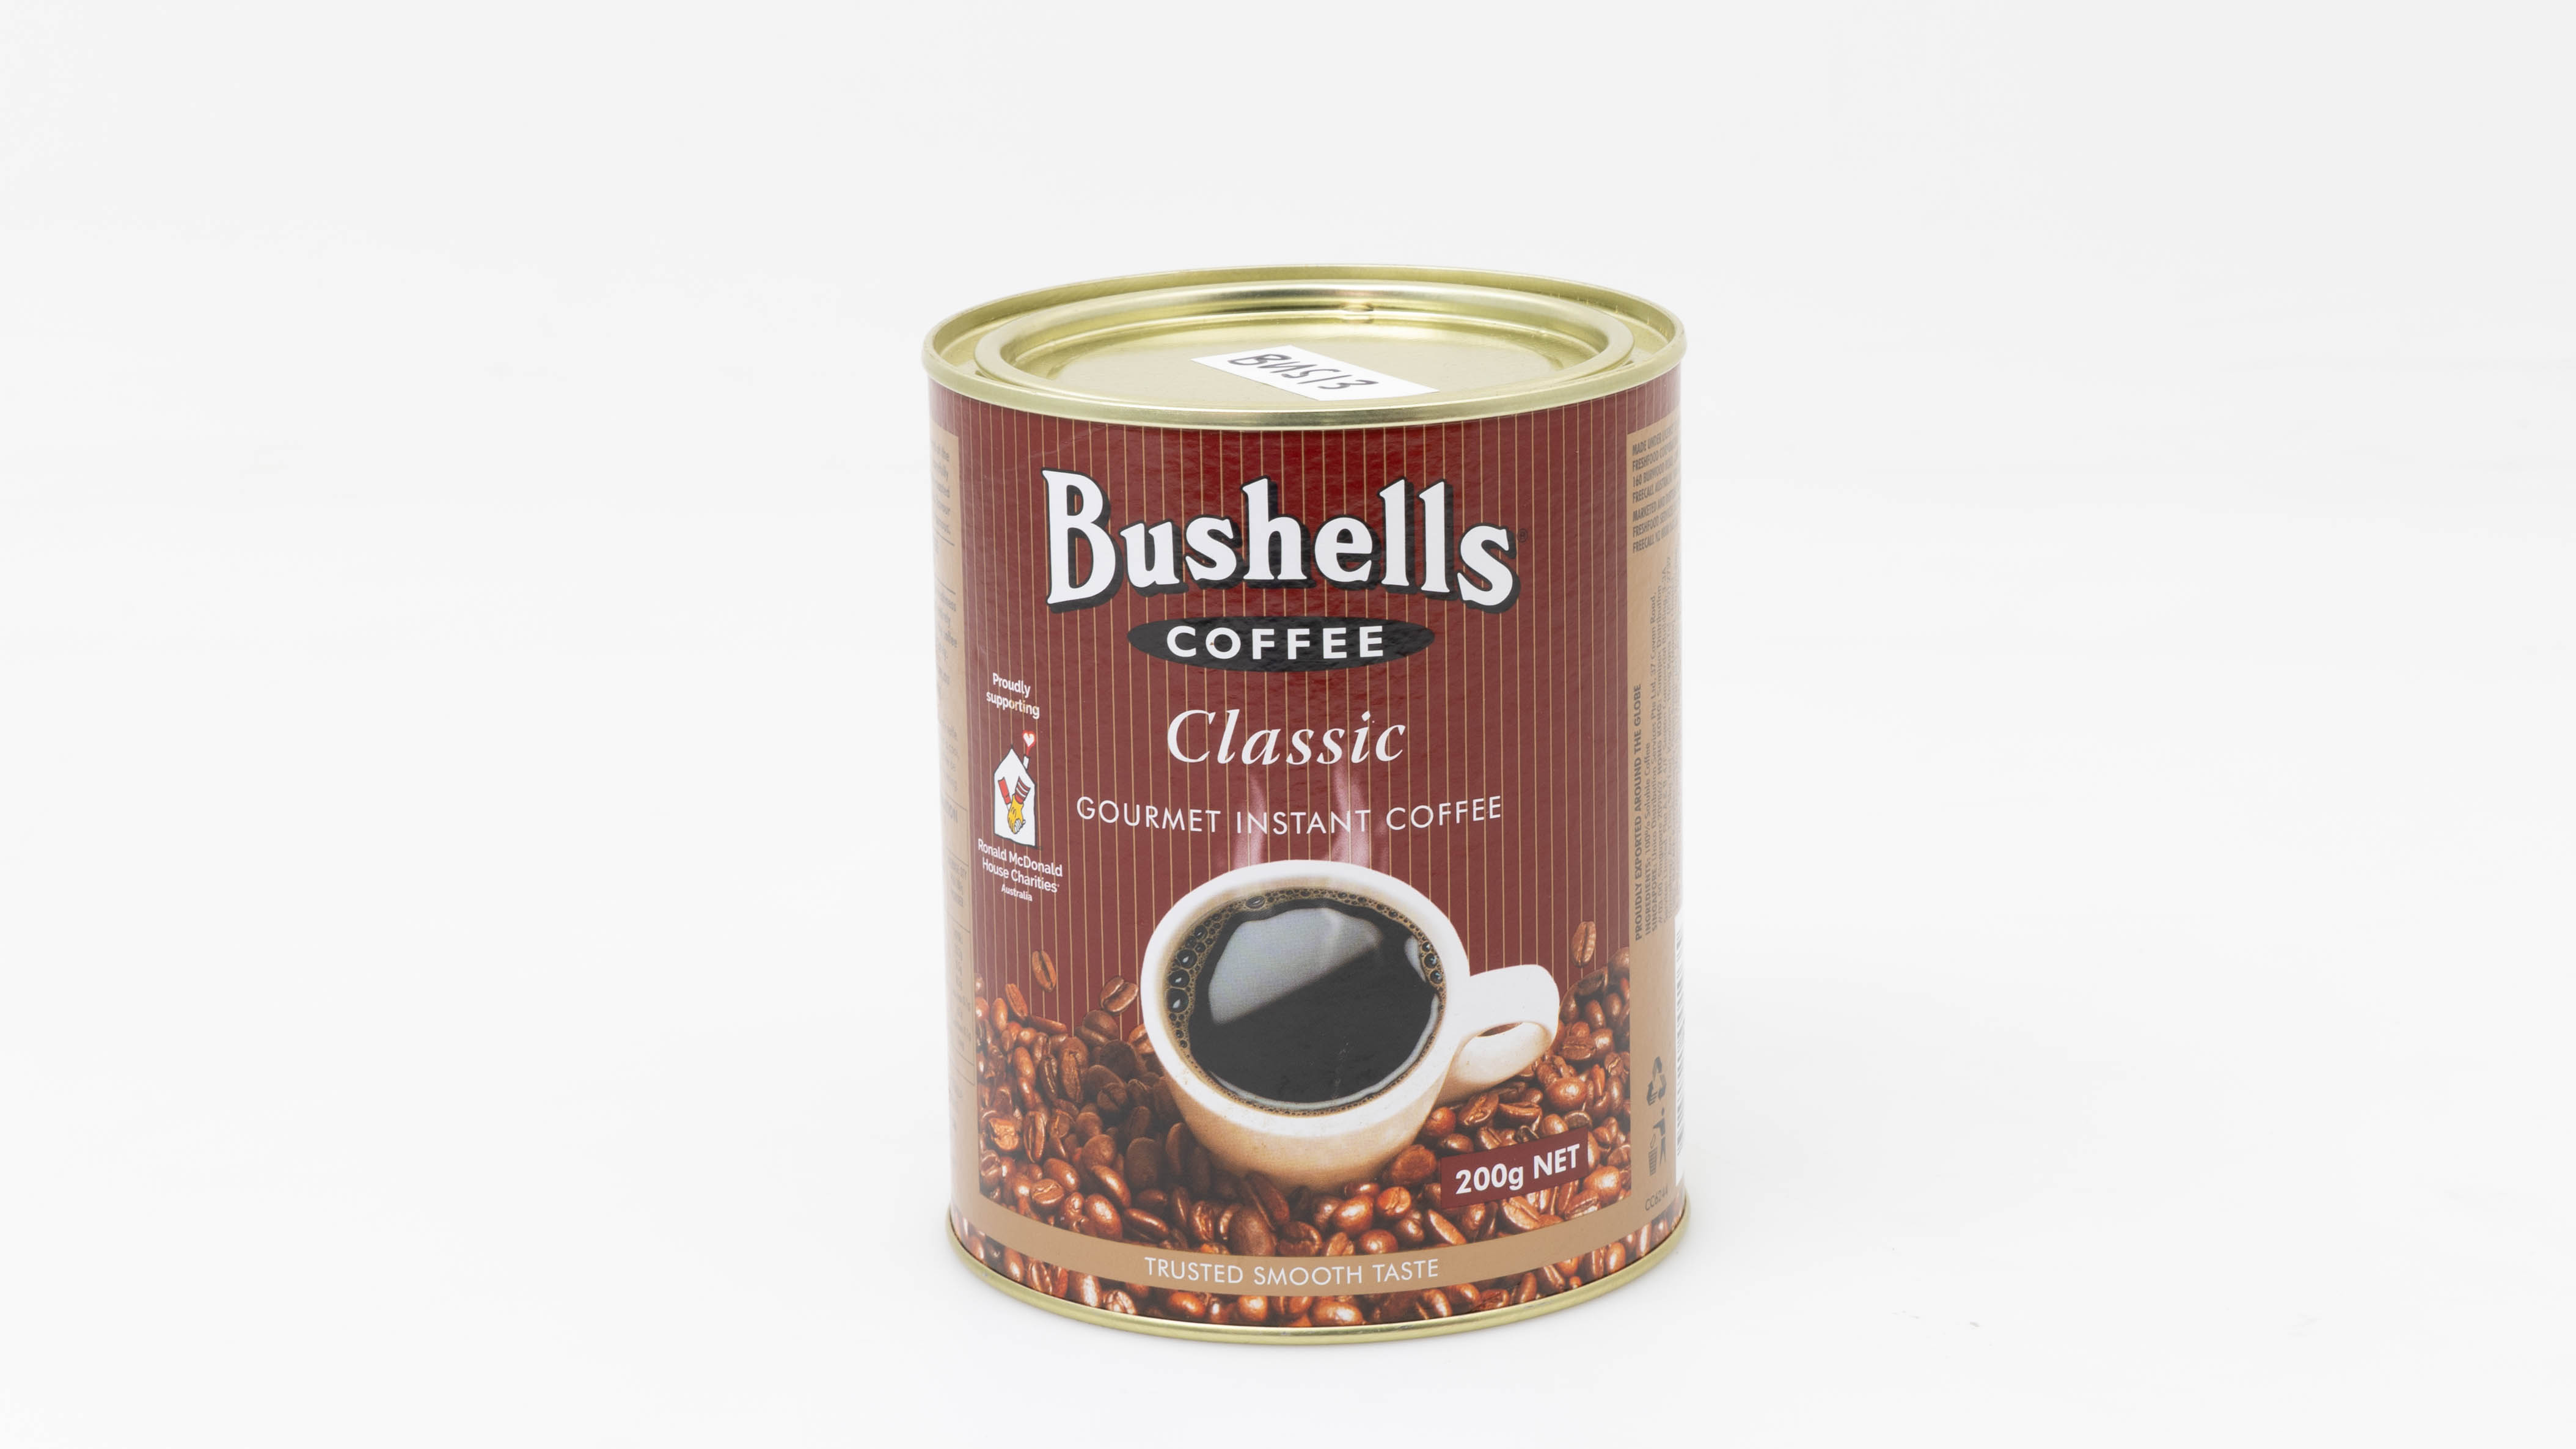 Bushells Classic Gourmet Instant Coffee carousel image